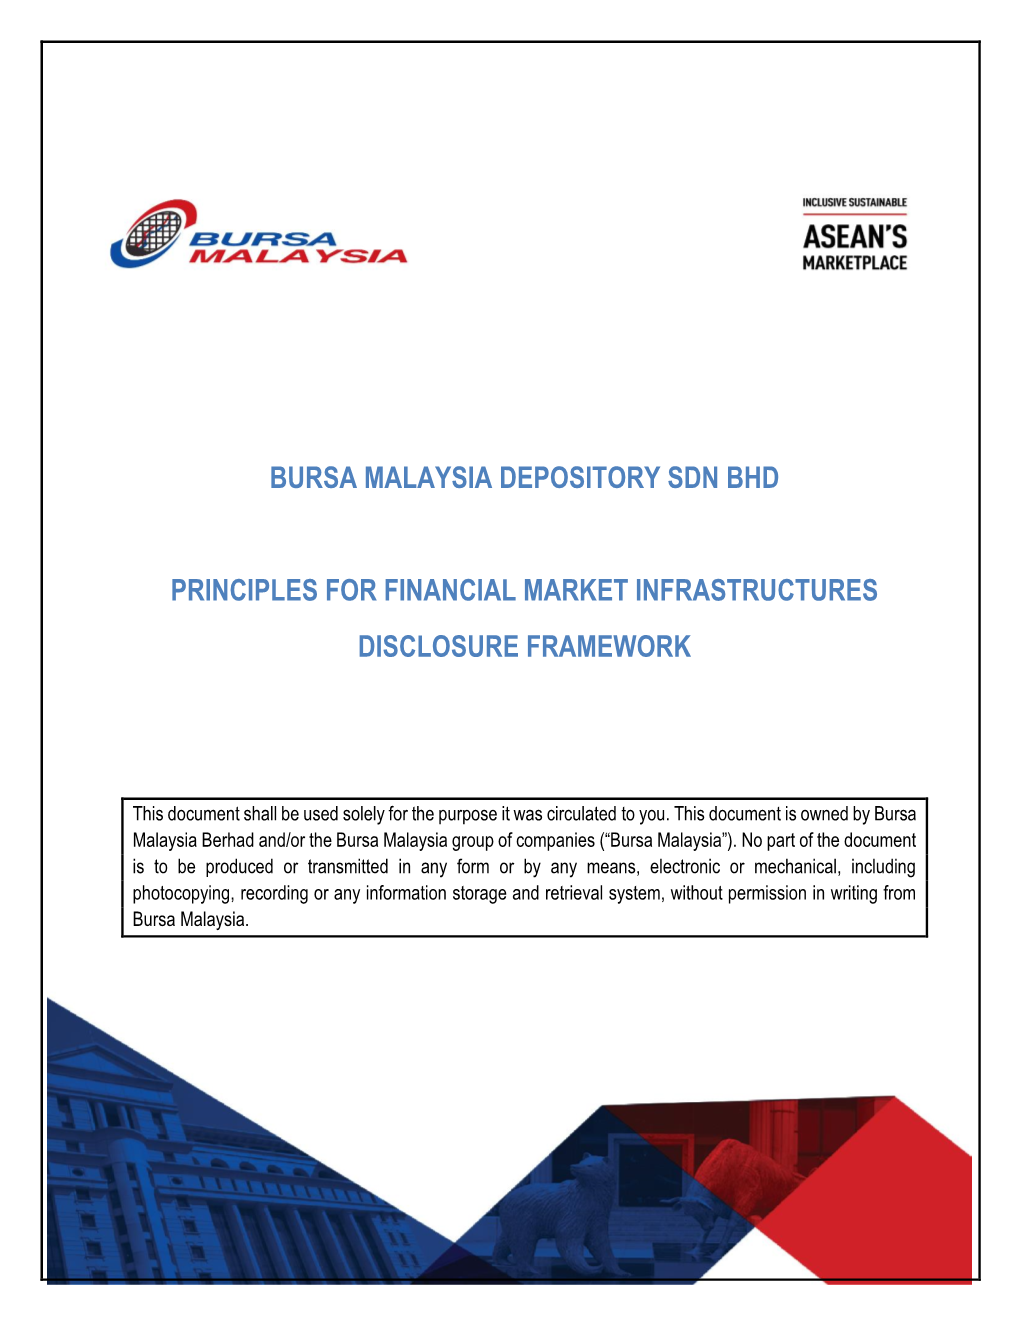 Bursa Malaysia Depository Sdn Bhd Principles for Financial Market